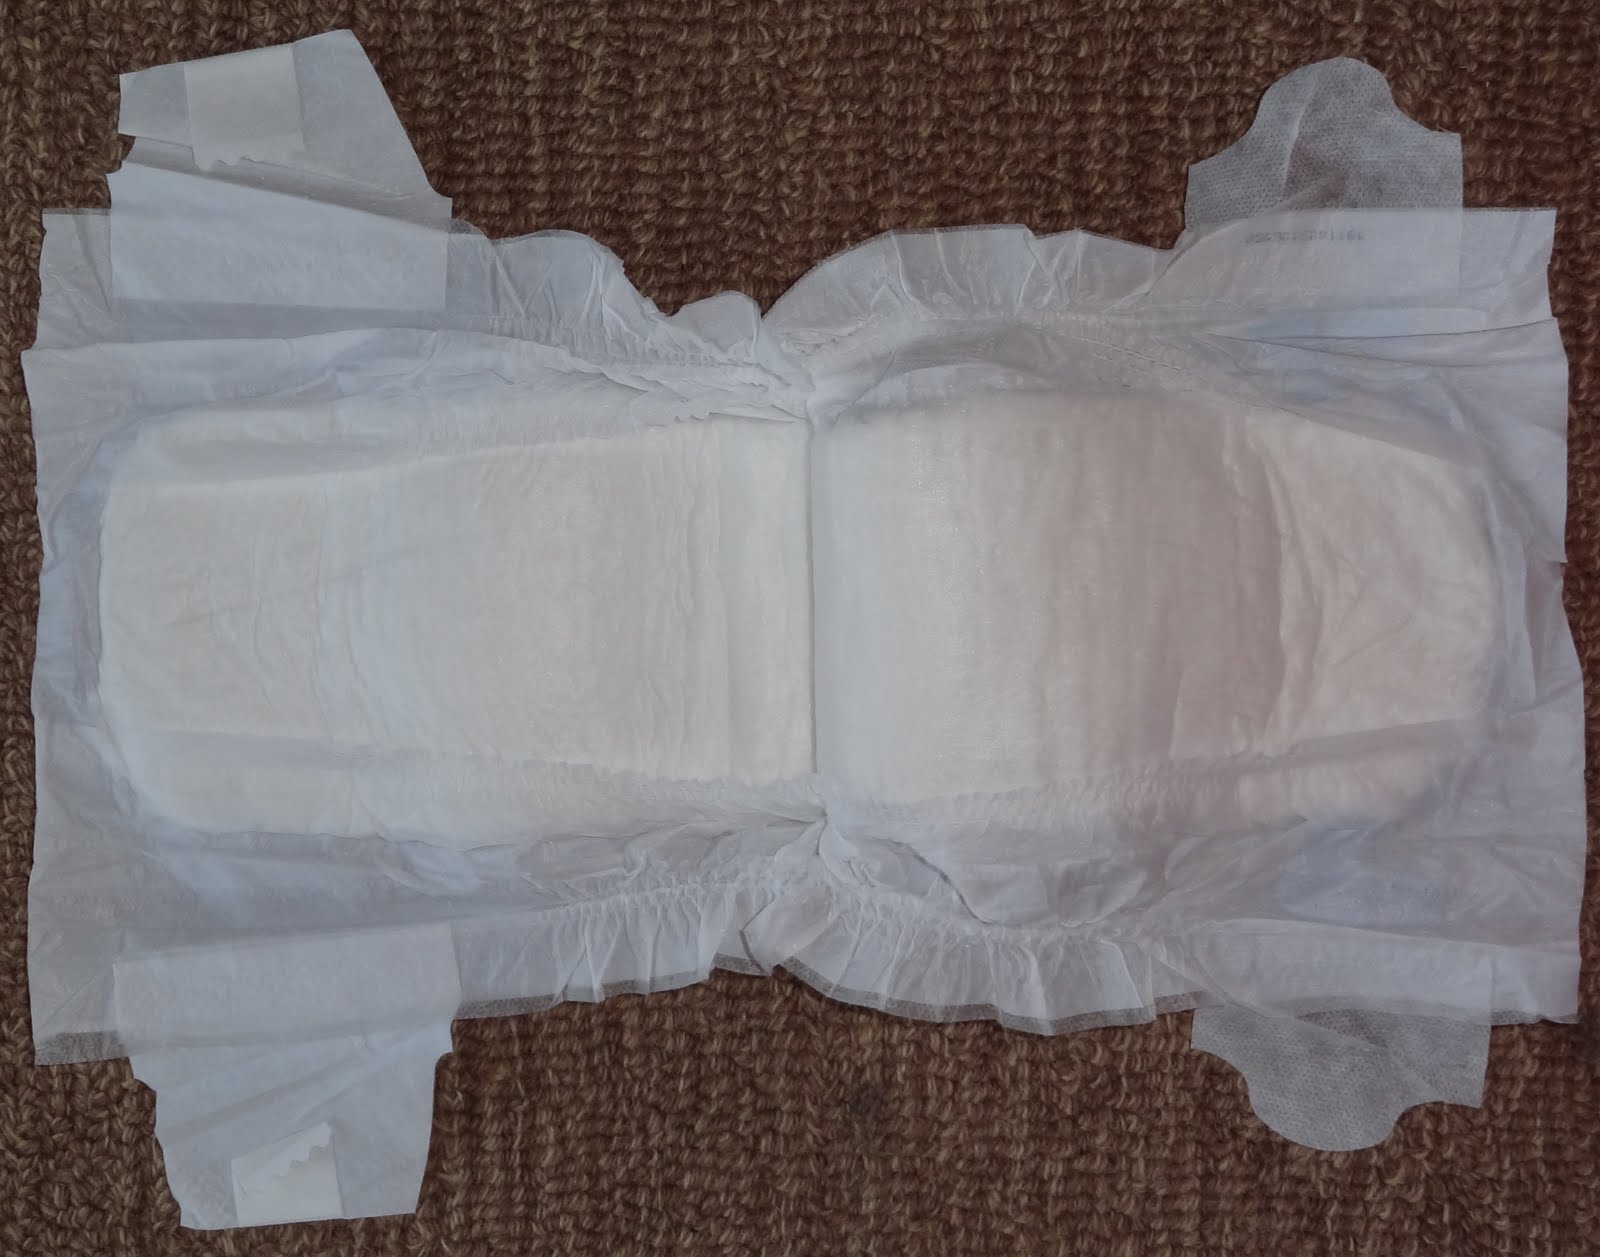 Bambo Nature Diaper and Training Pants Review | Macaroni Kid San ...